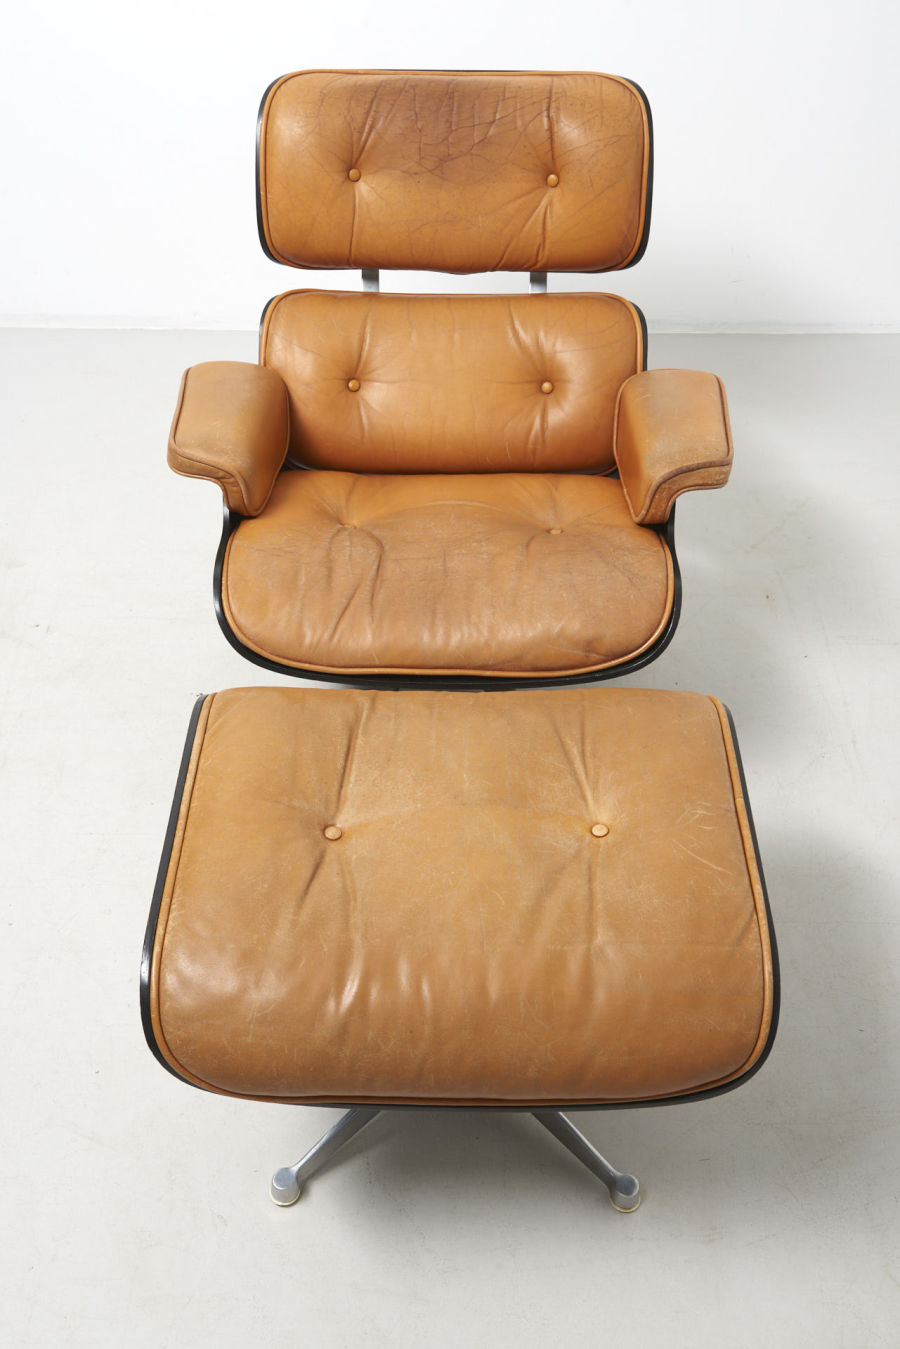 modestfurniture-vintage-2502-eames-lounge-chair-natural-leather-herman-miller03